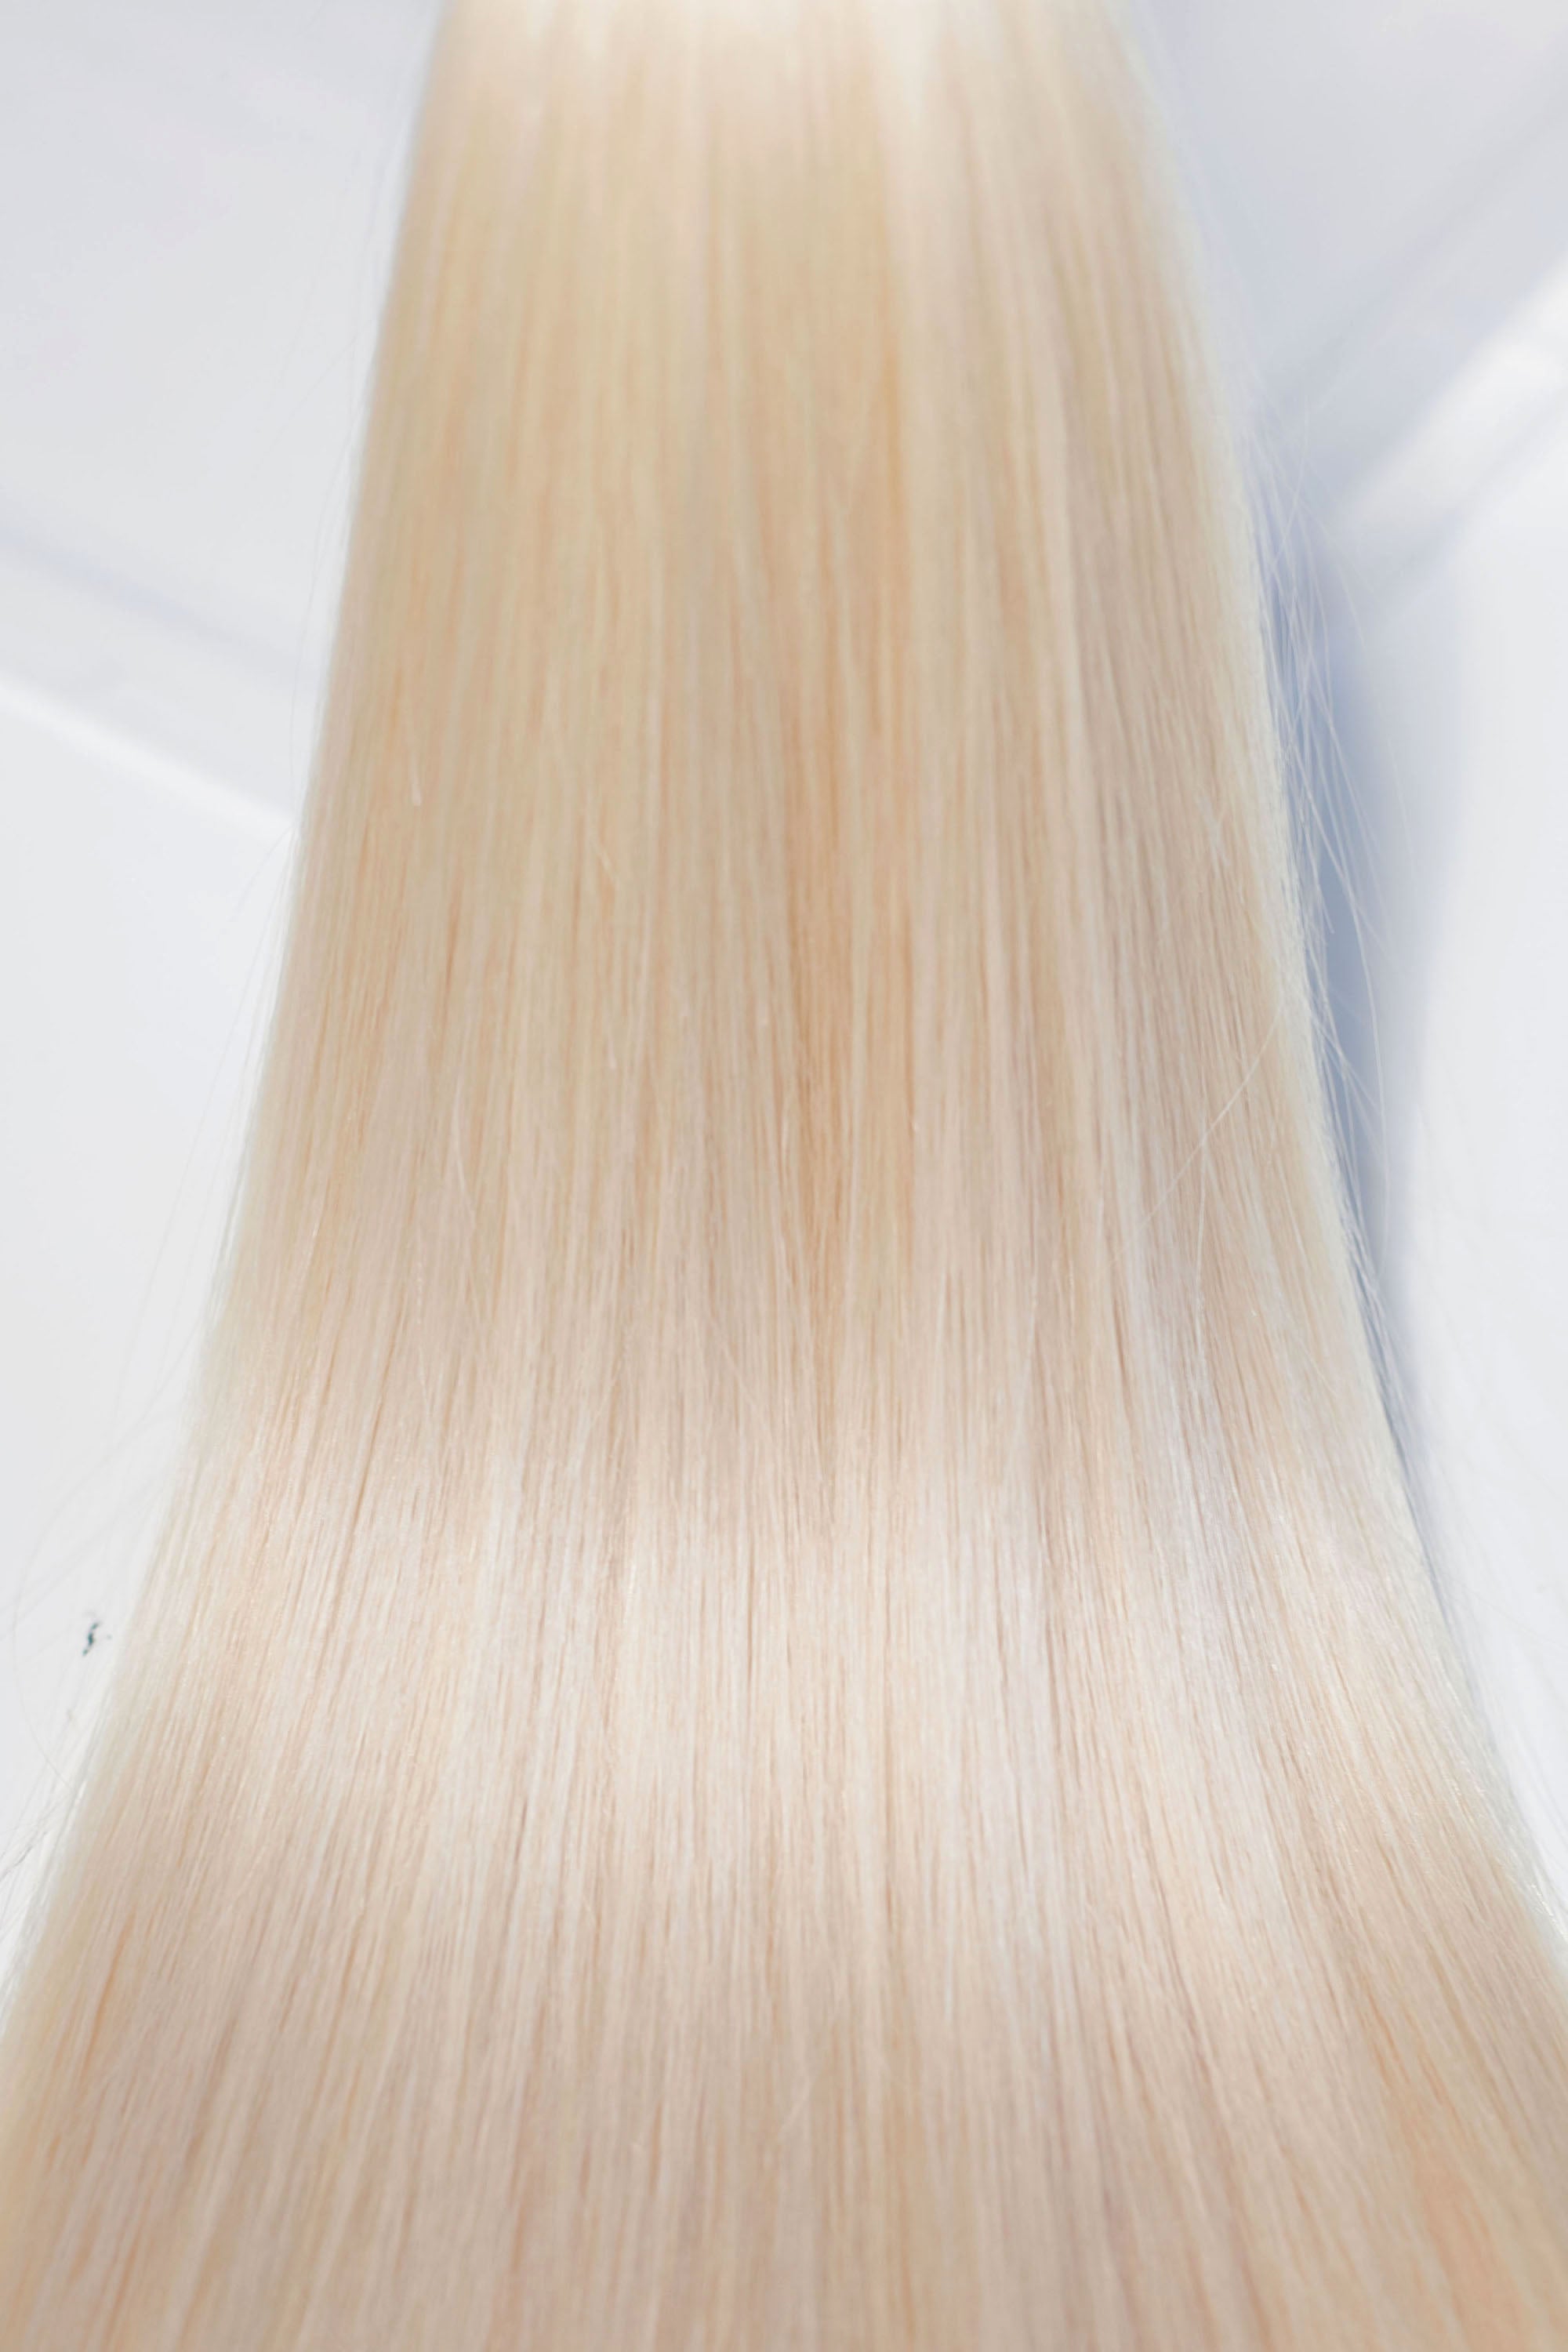 Behair professional Keratin Tip "Premium" 18" (45cm) Natural Straight Ice Blond #000 - 25g (Micro - 0.5g each pcs) hair extensions